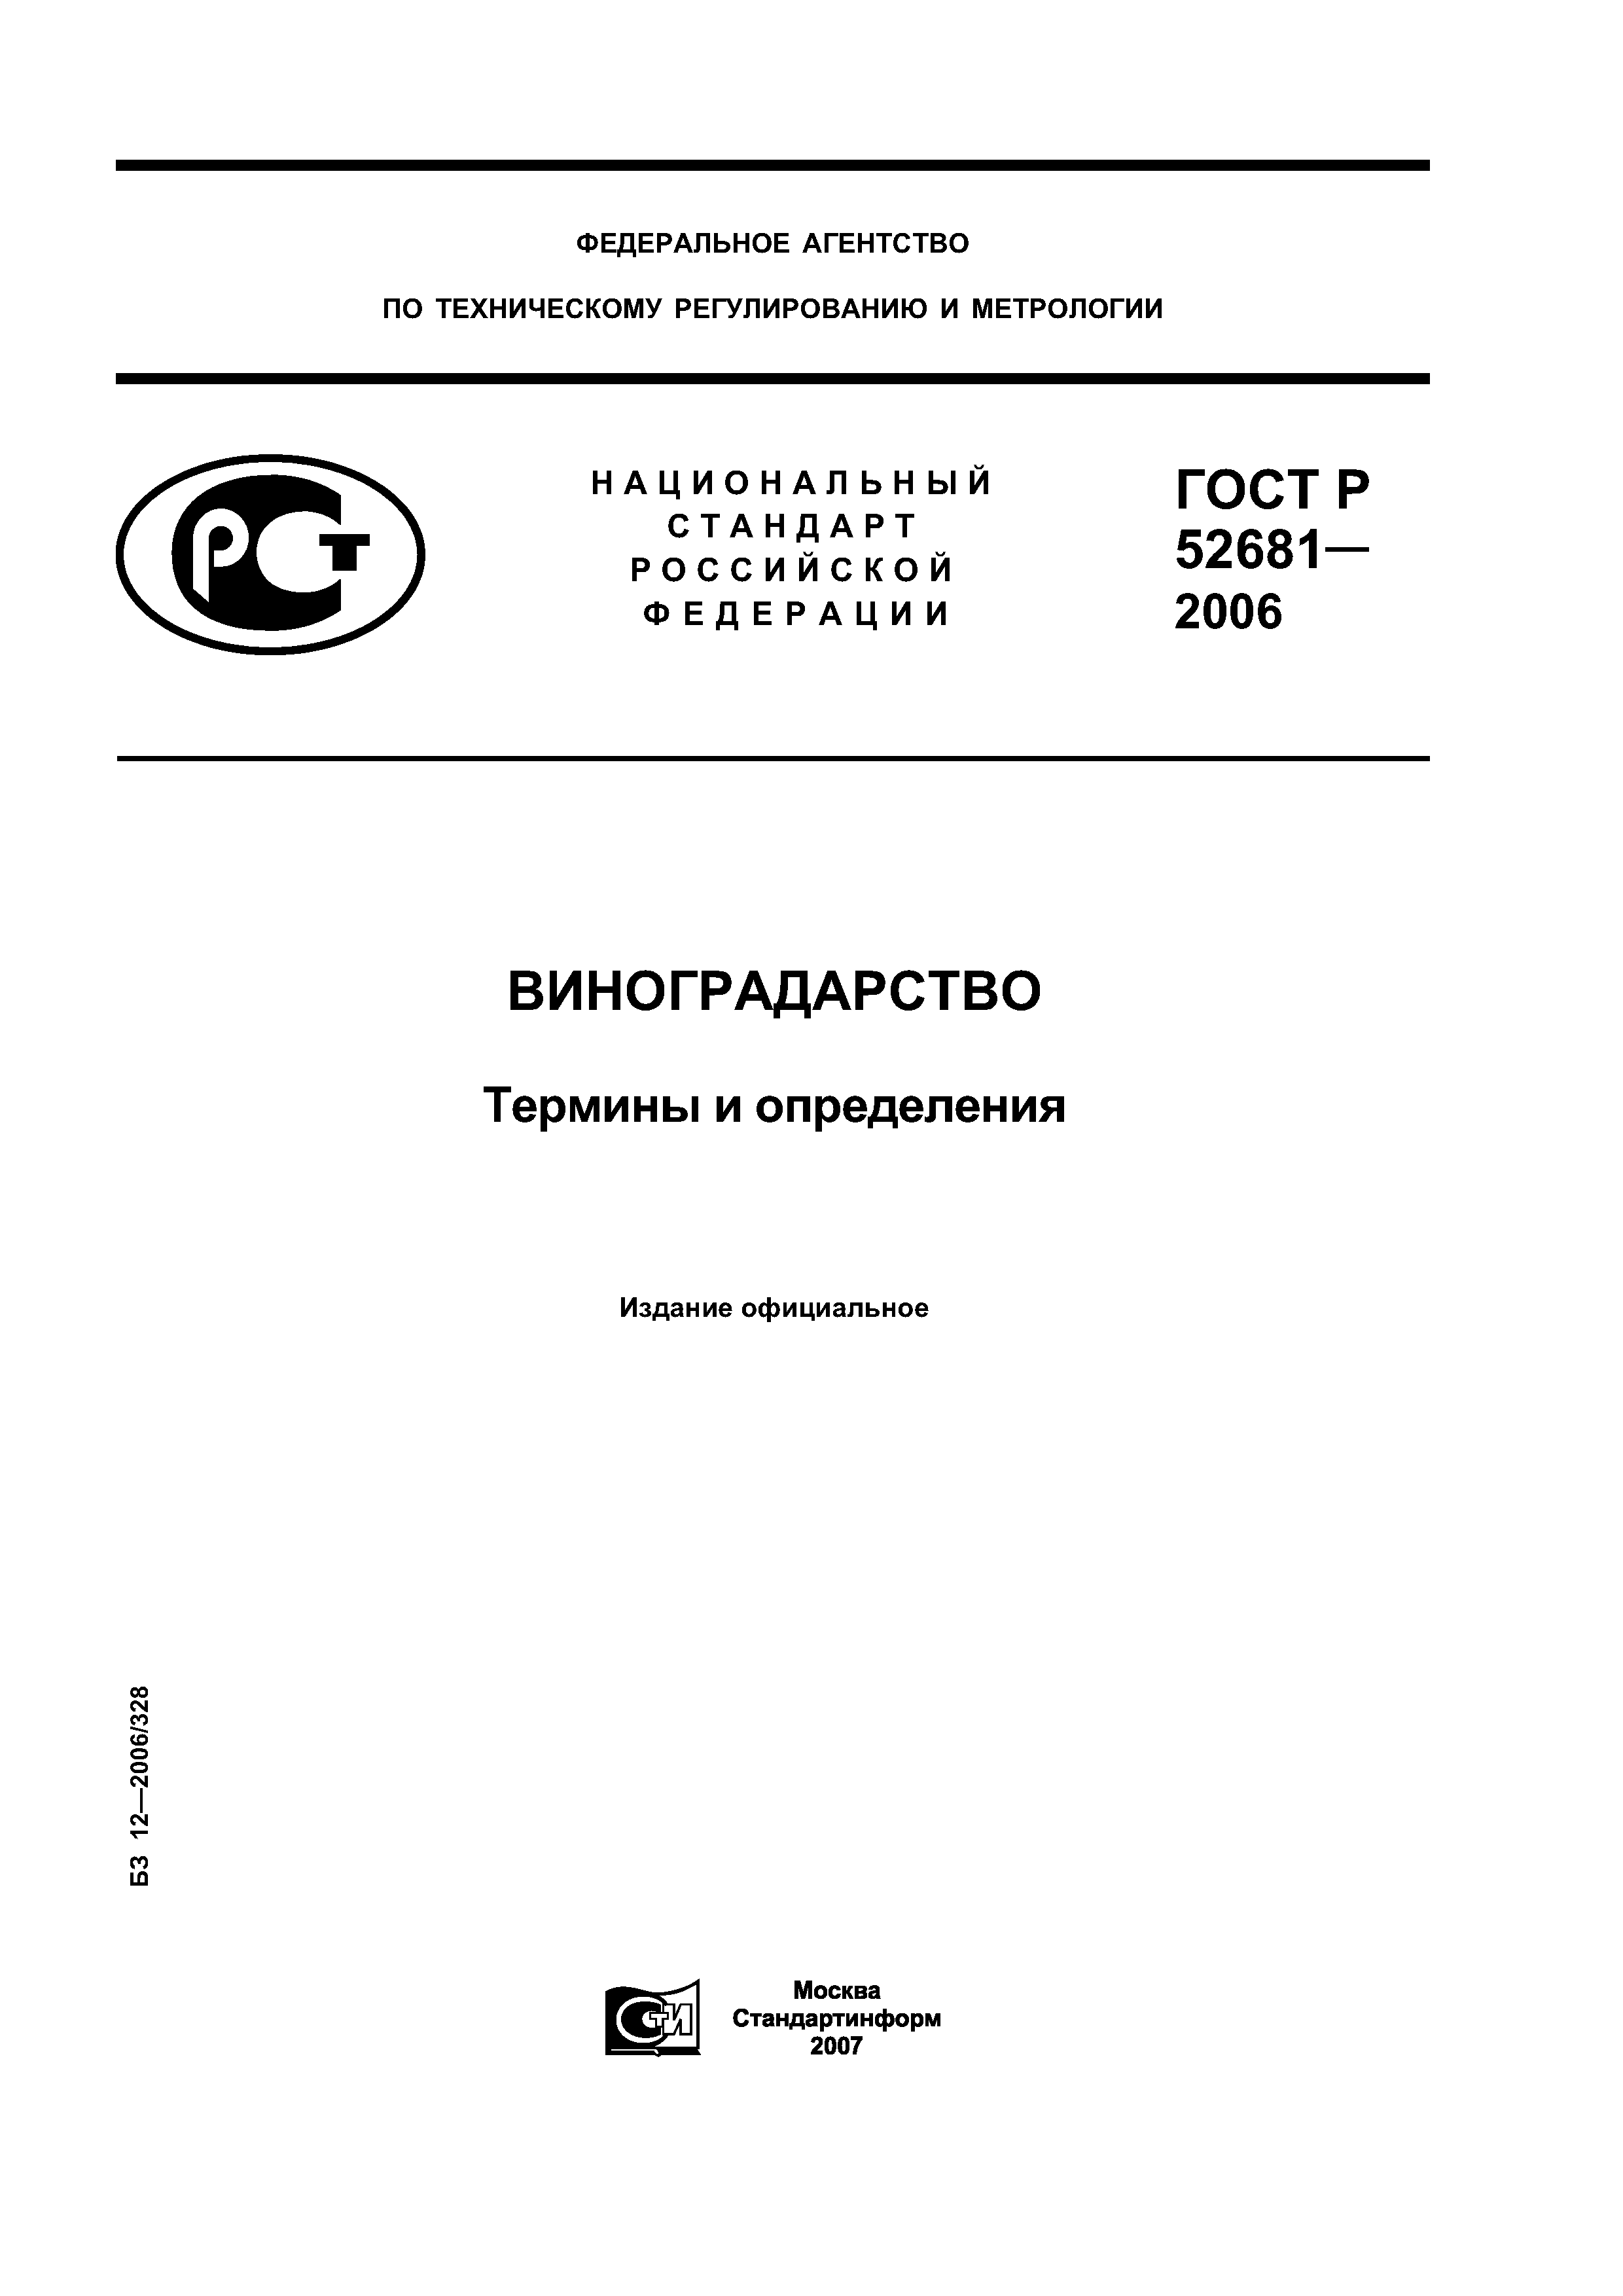 ГОСТ Р 52681-2006